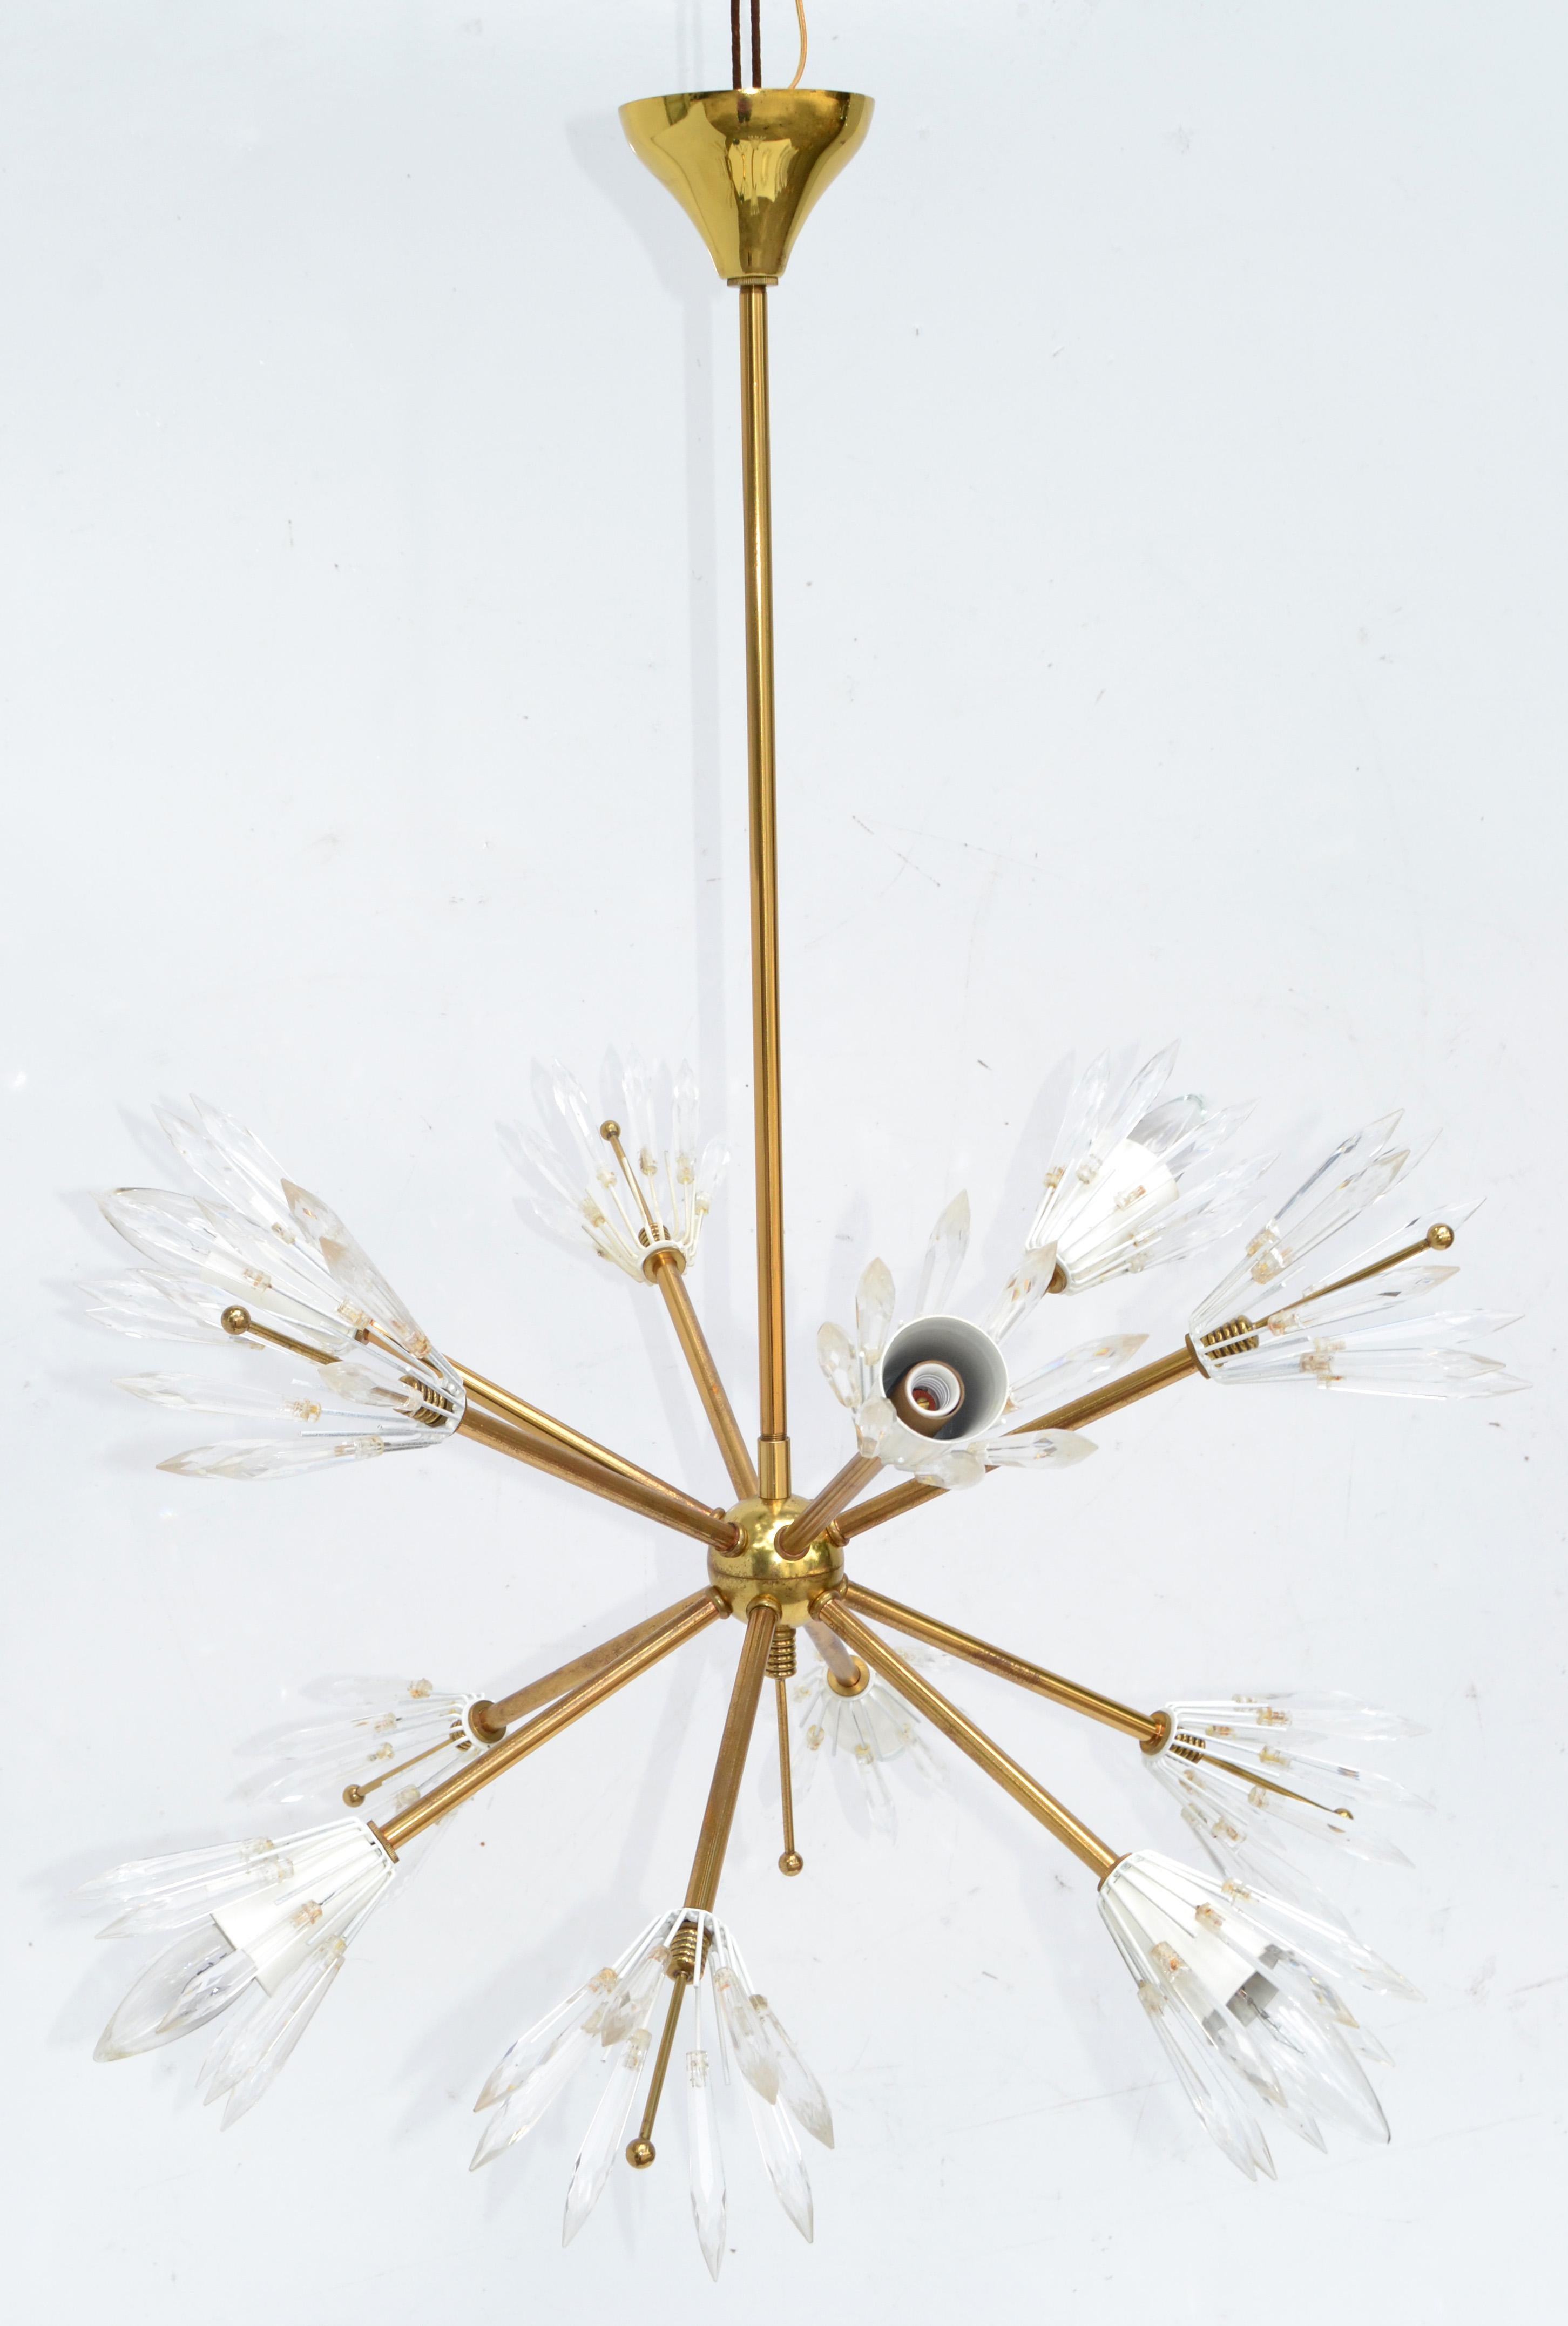 Emil Stejnar Austria Six Light Brass Blown Glass Flush Mount Sputnik Orbit, 1950 For Sale 8